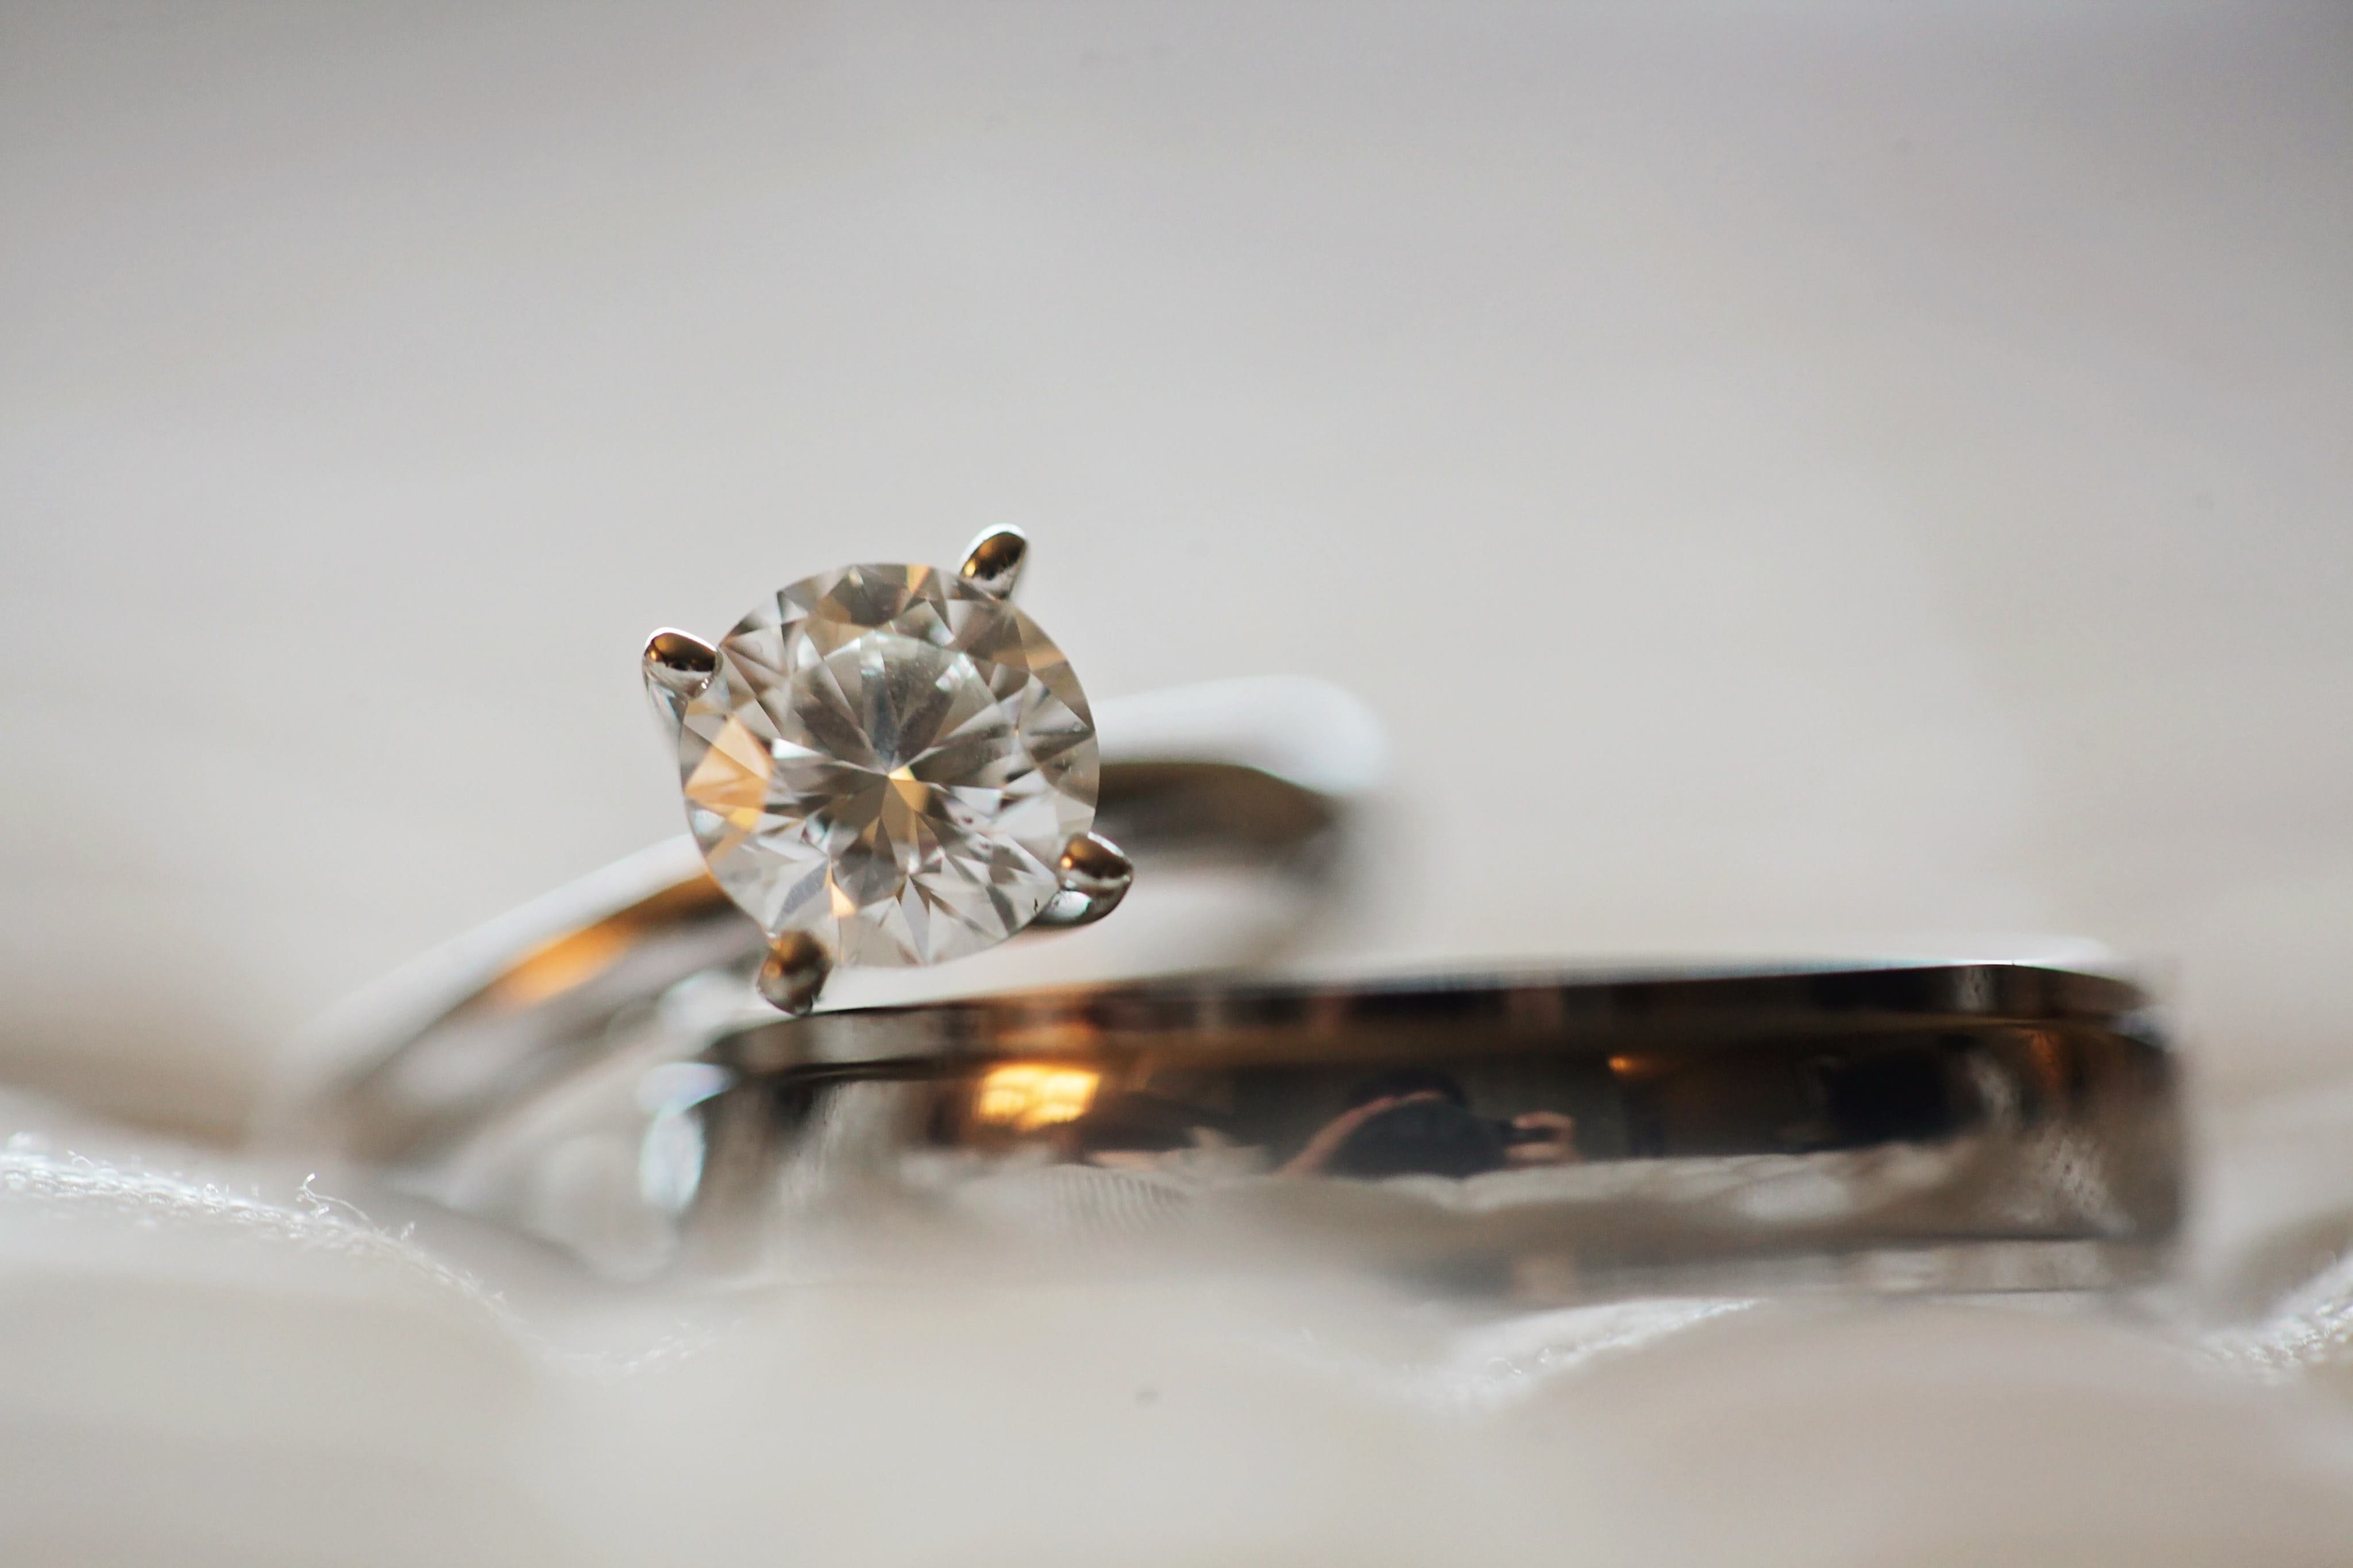 Engagement ring. | Photo: Pexels